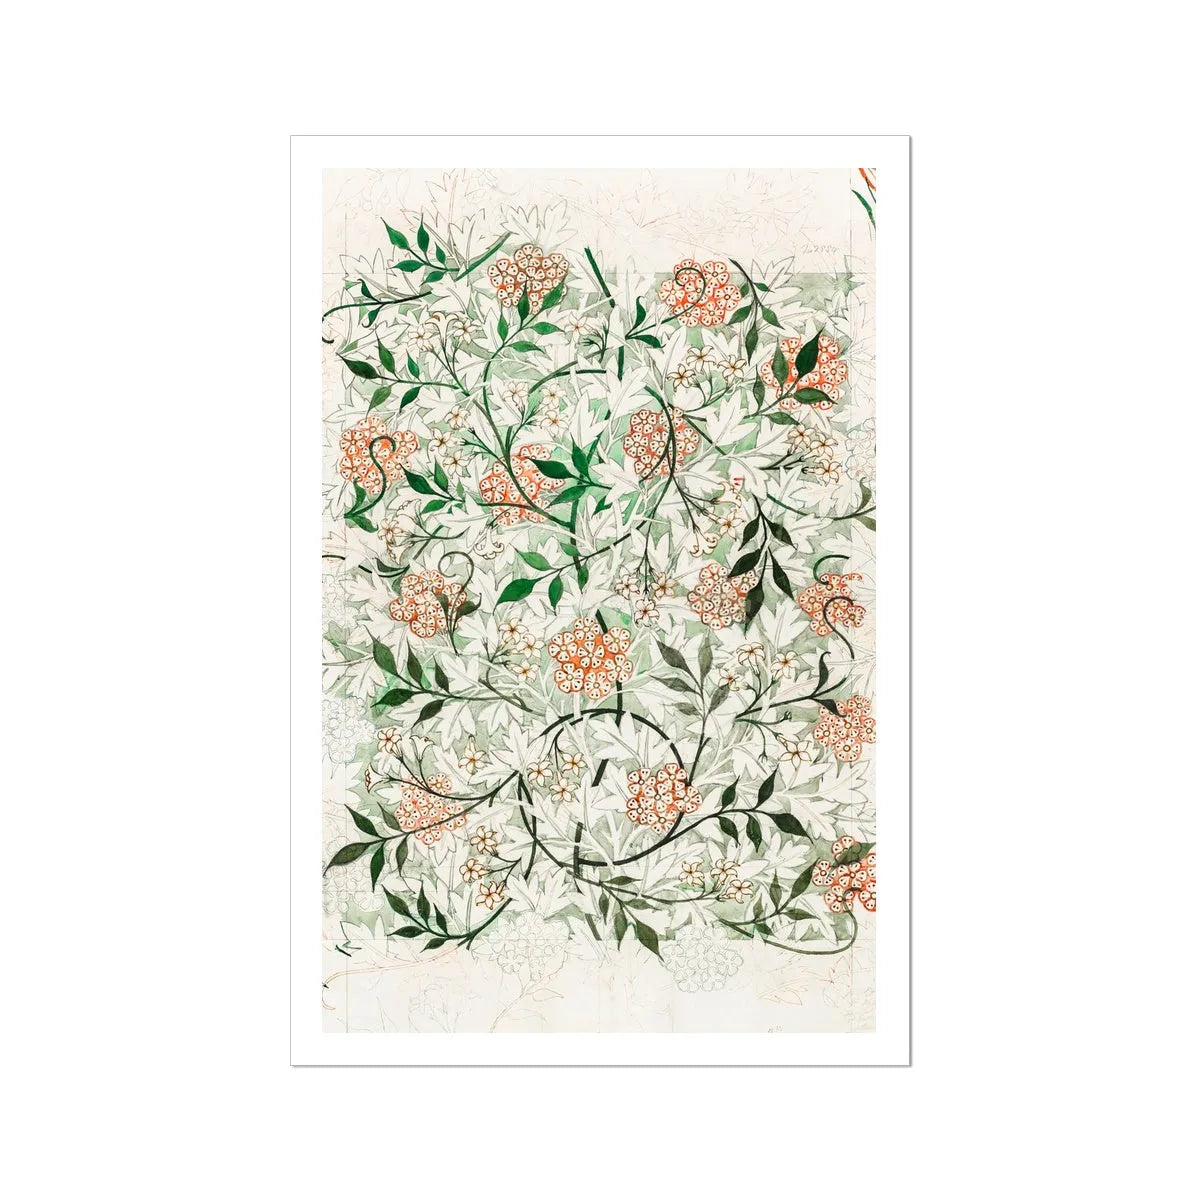 Jasmine - William Morris British Floral Textile Art Print - Posters Prints & Visual Artwork - Aesthetic Art